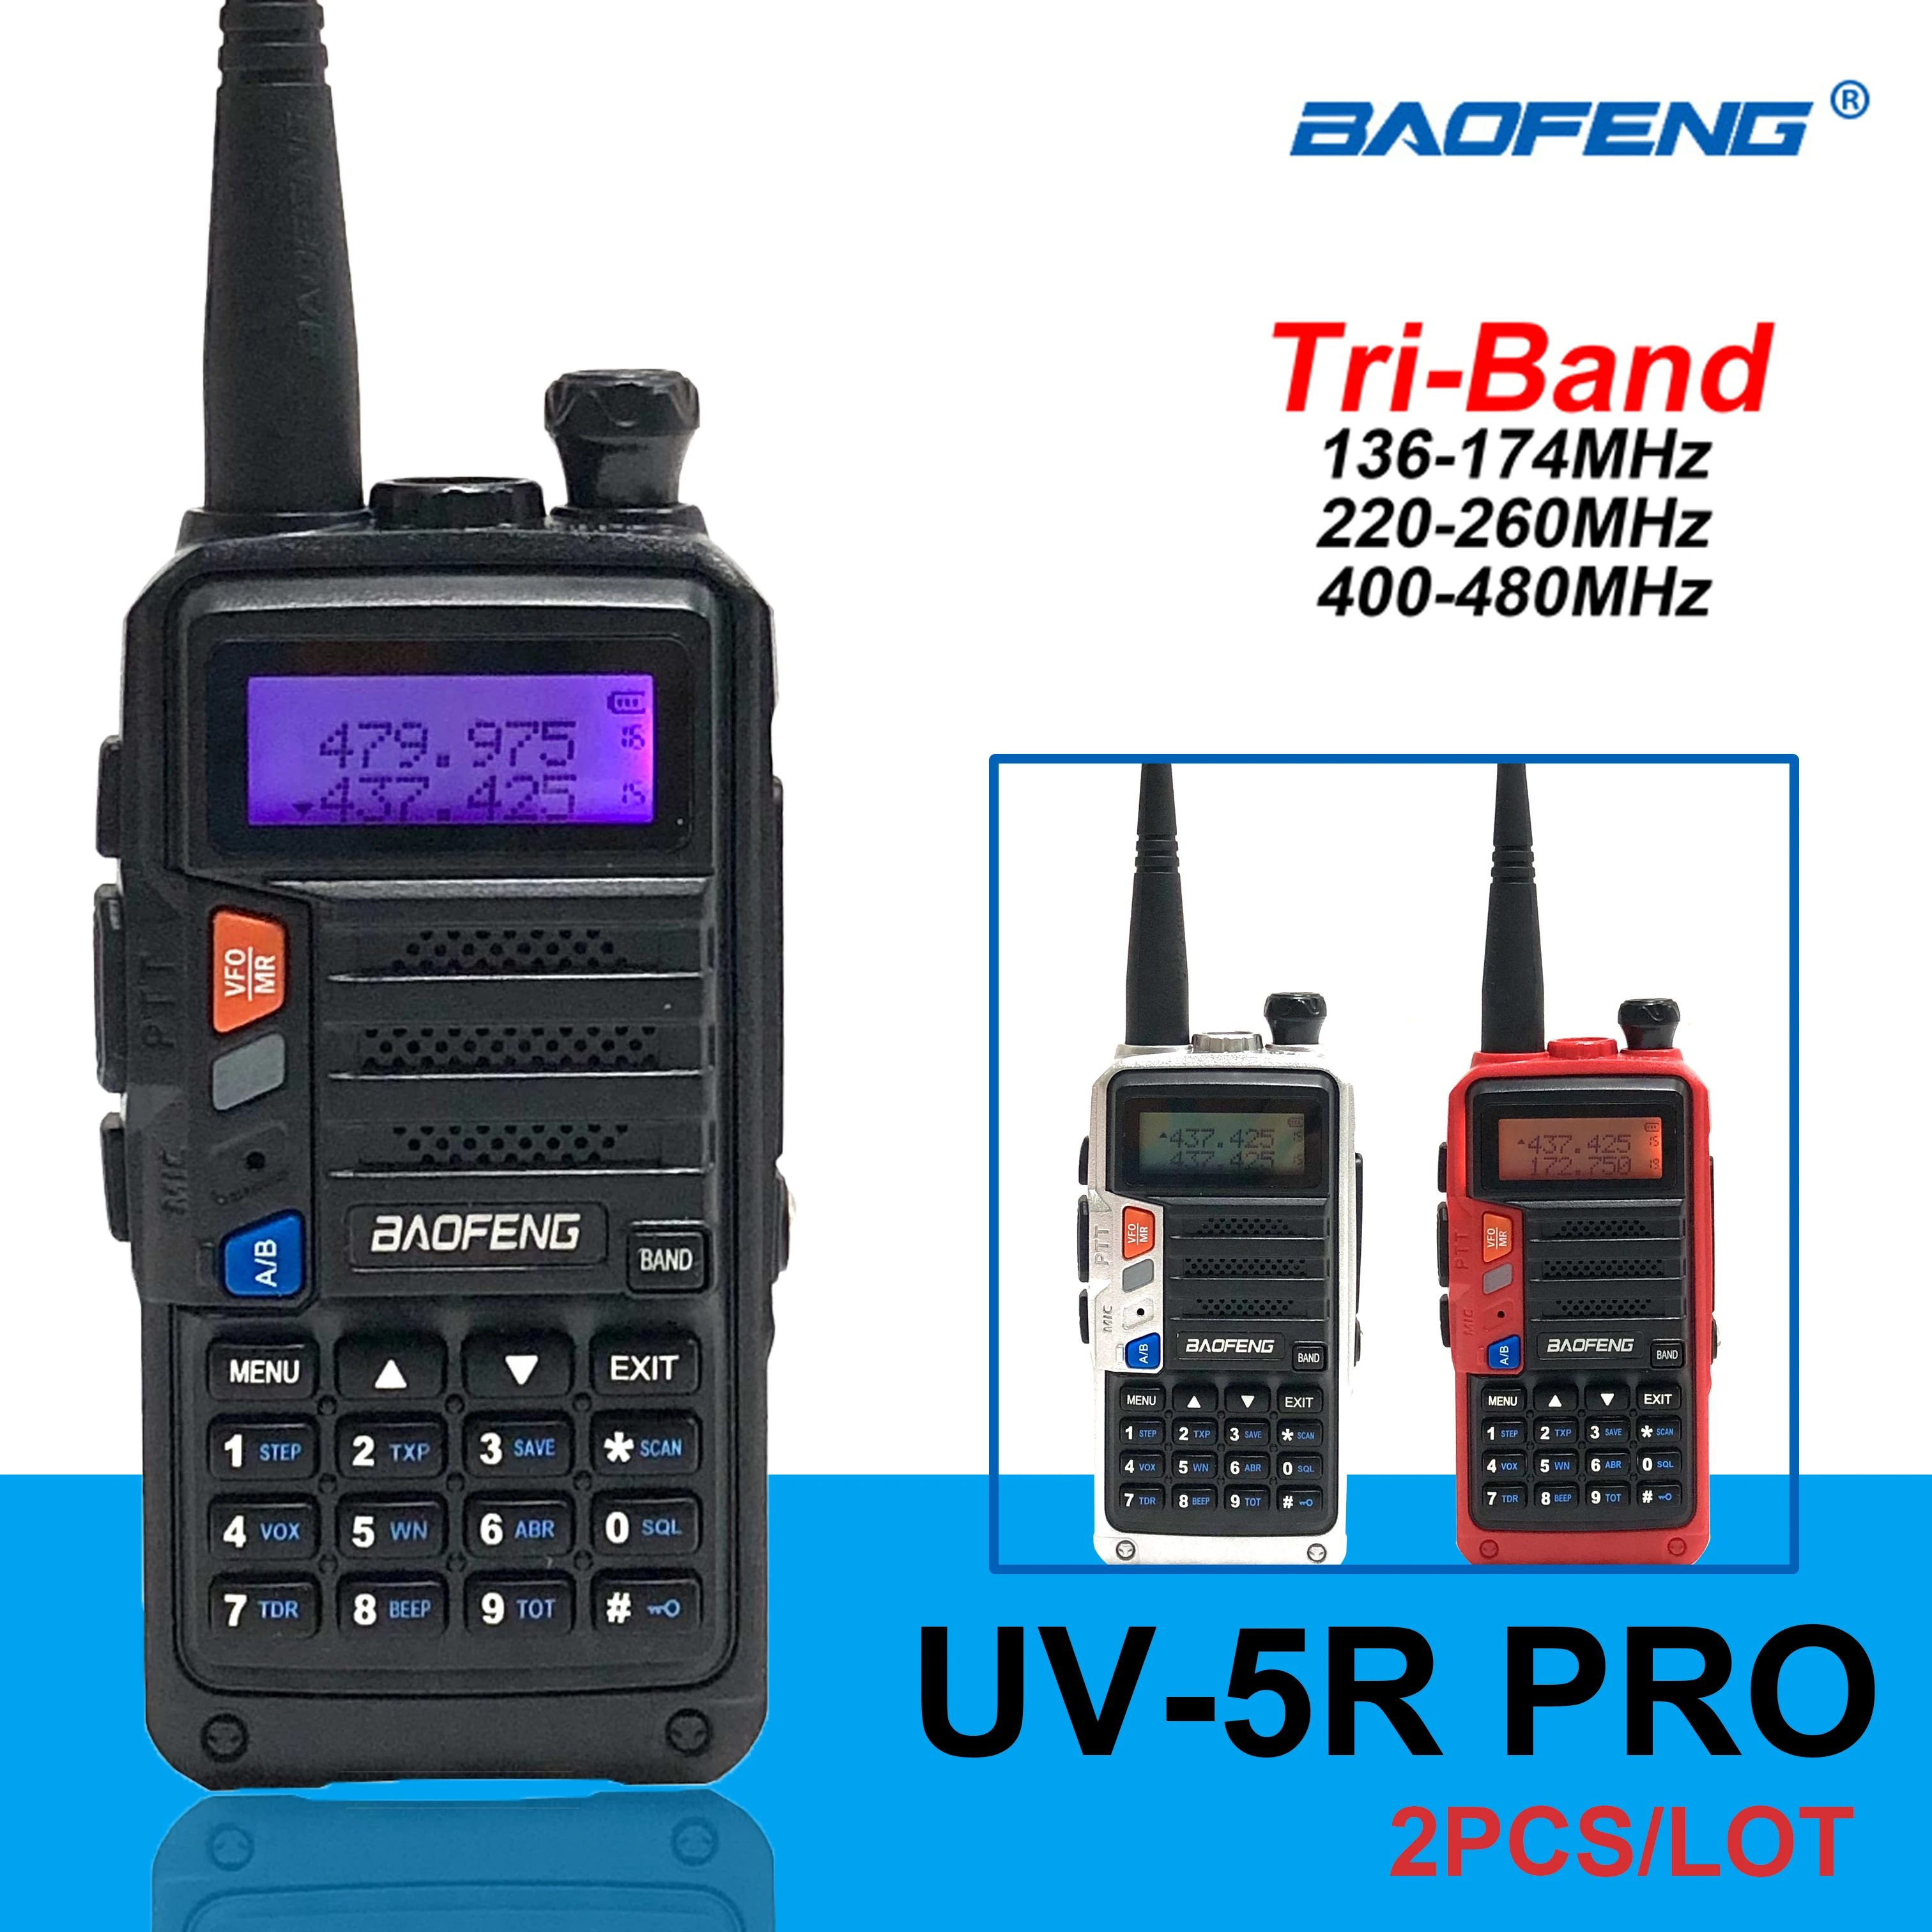 Baofeng Radio UV-5R Pro 2Pcs/Lot Tri-Band 8W High Power Handheld Walkie-Talkie 2 Way Ham Radios HF Transceiver UV-5R Update 2020